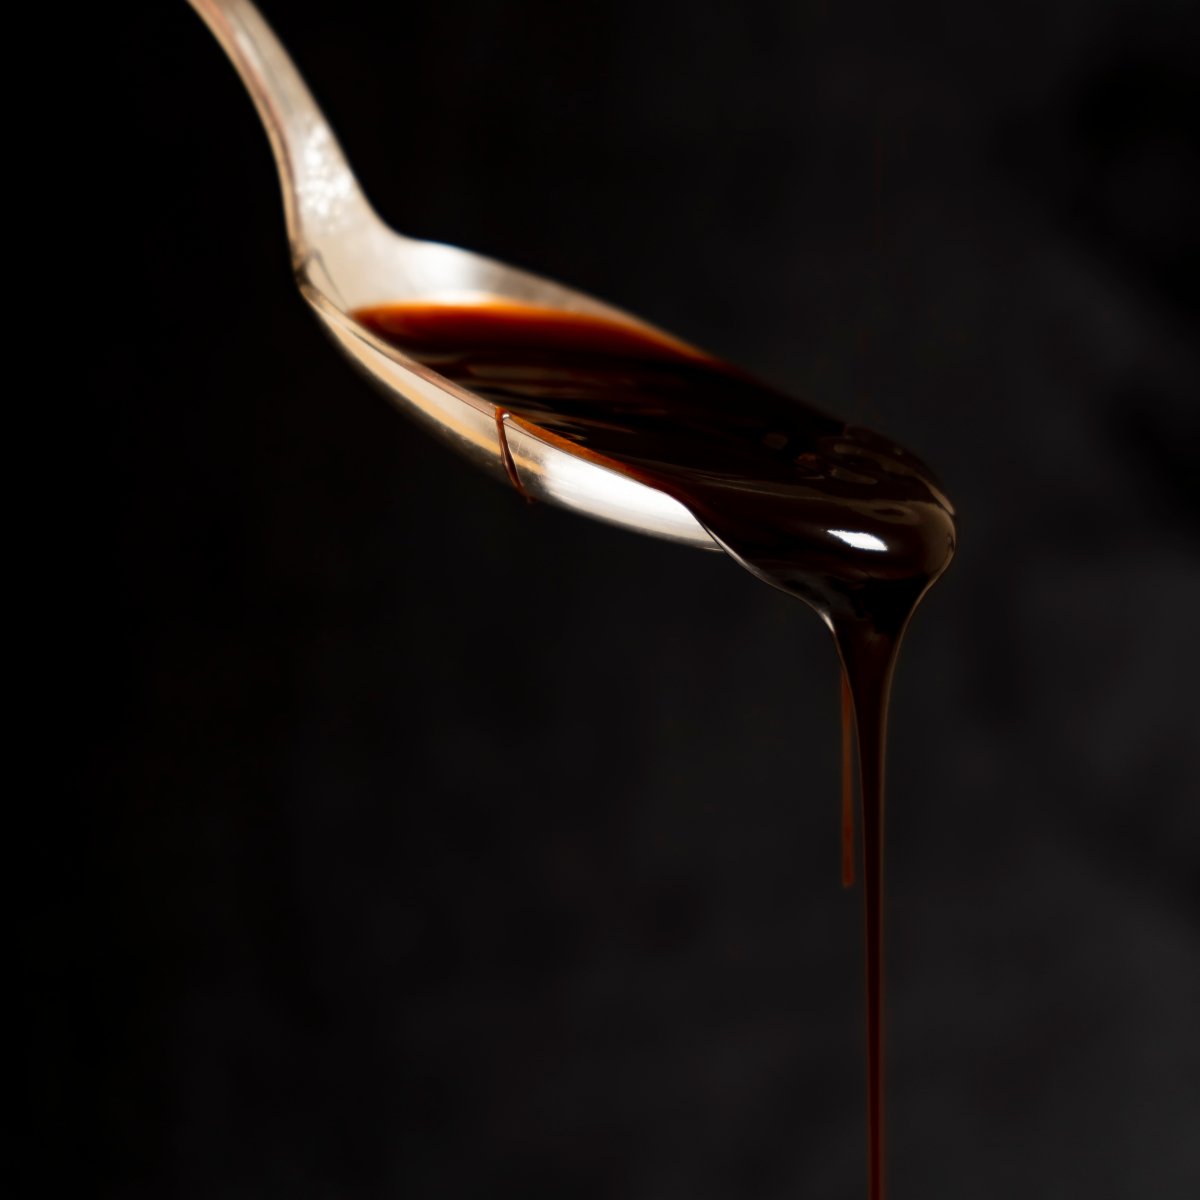 dark-caramel-sauce-dripping-from-a-spoon